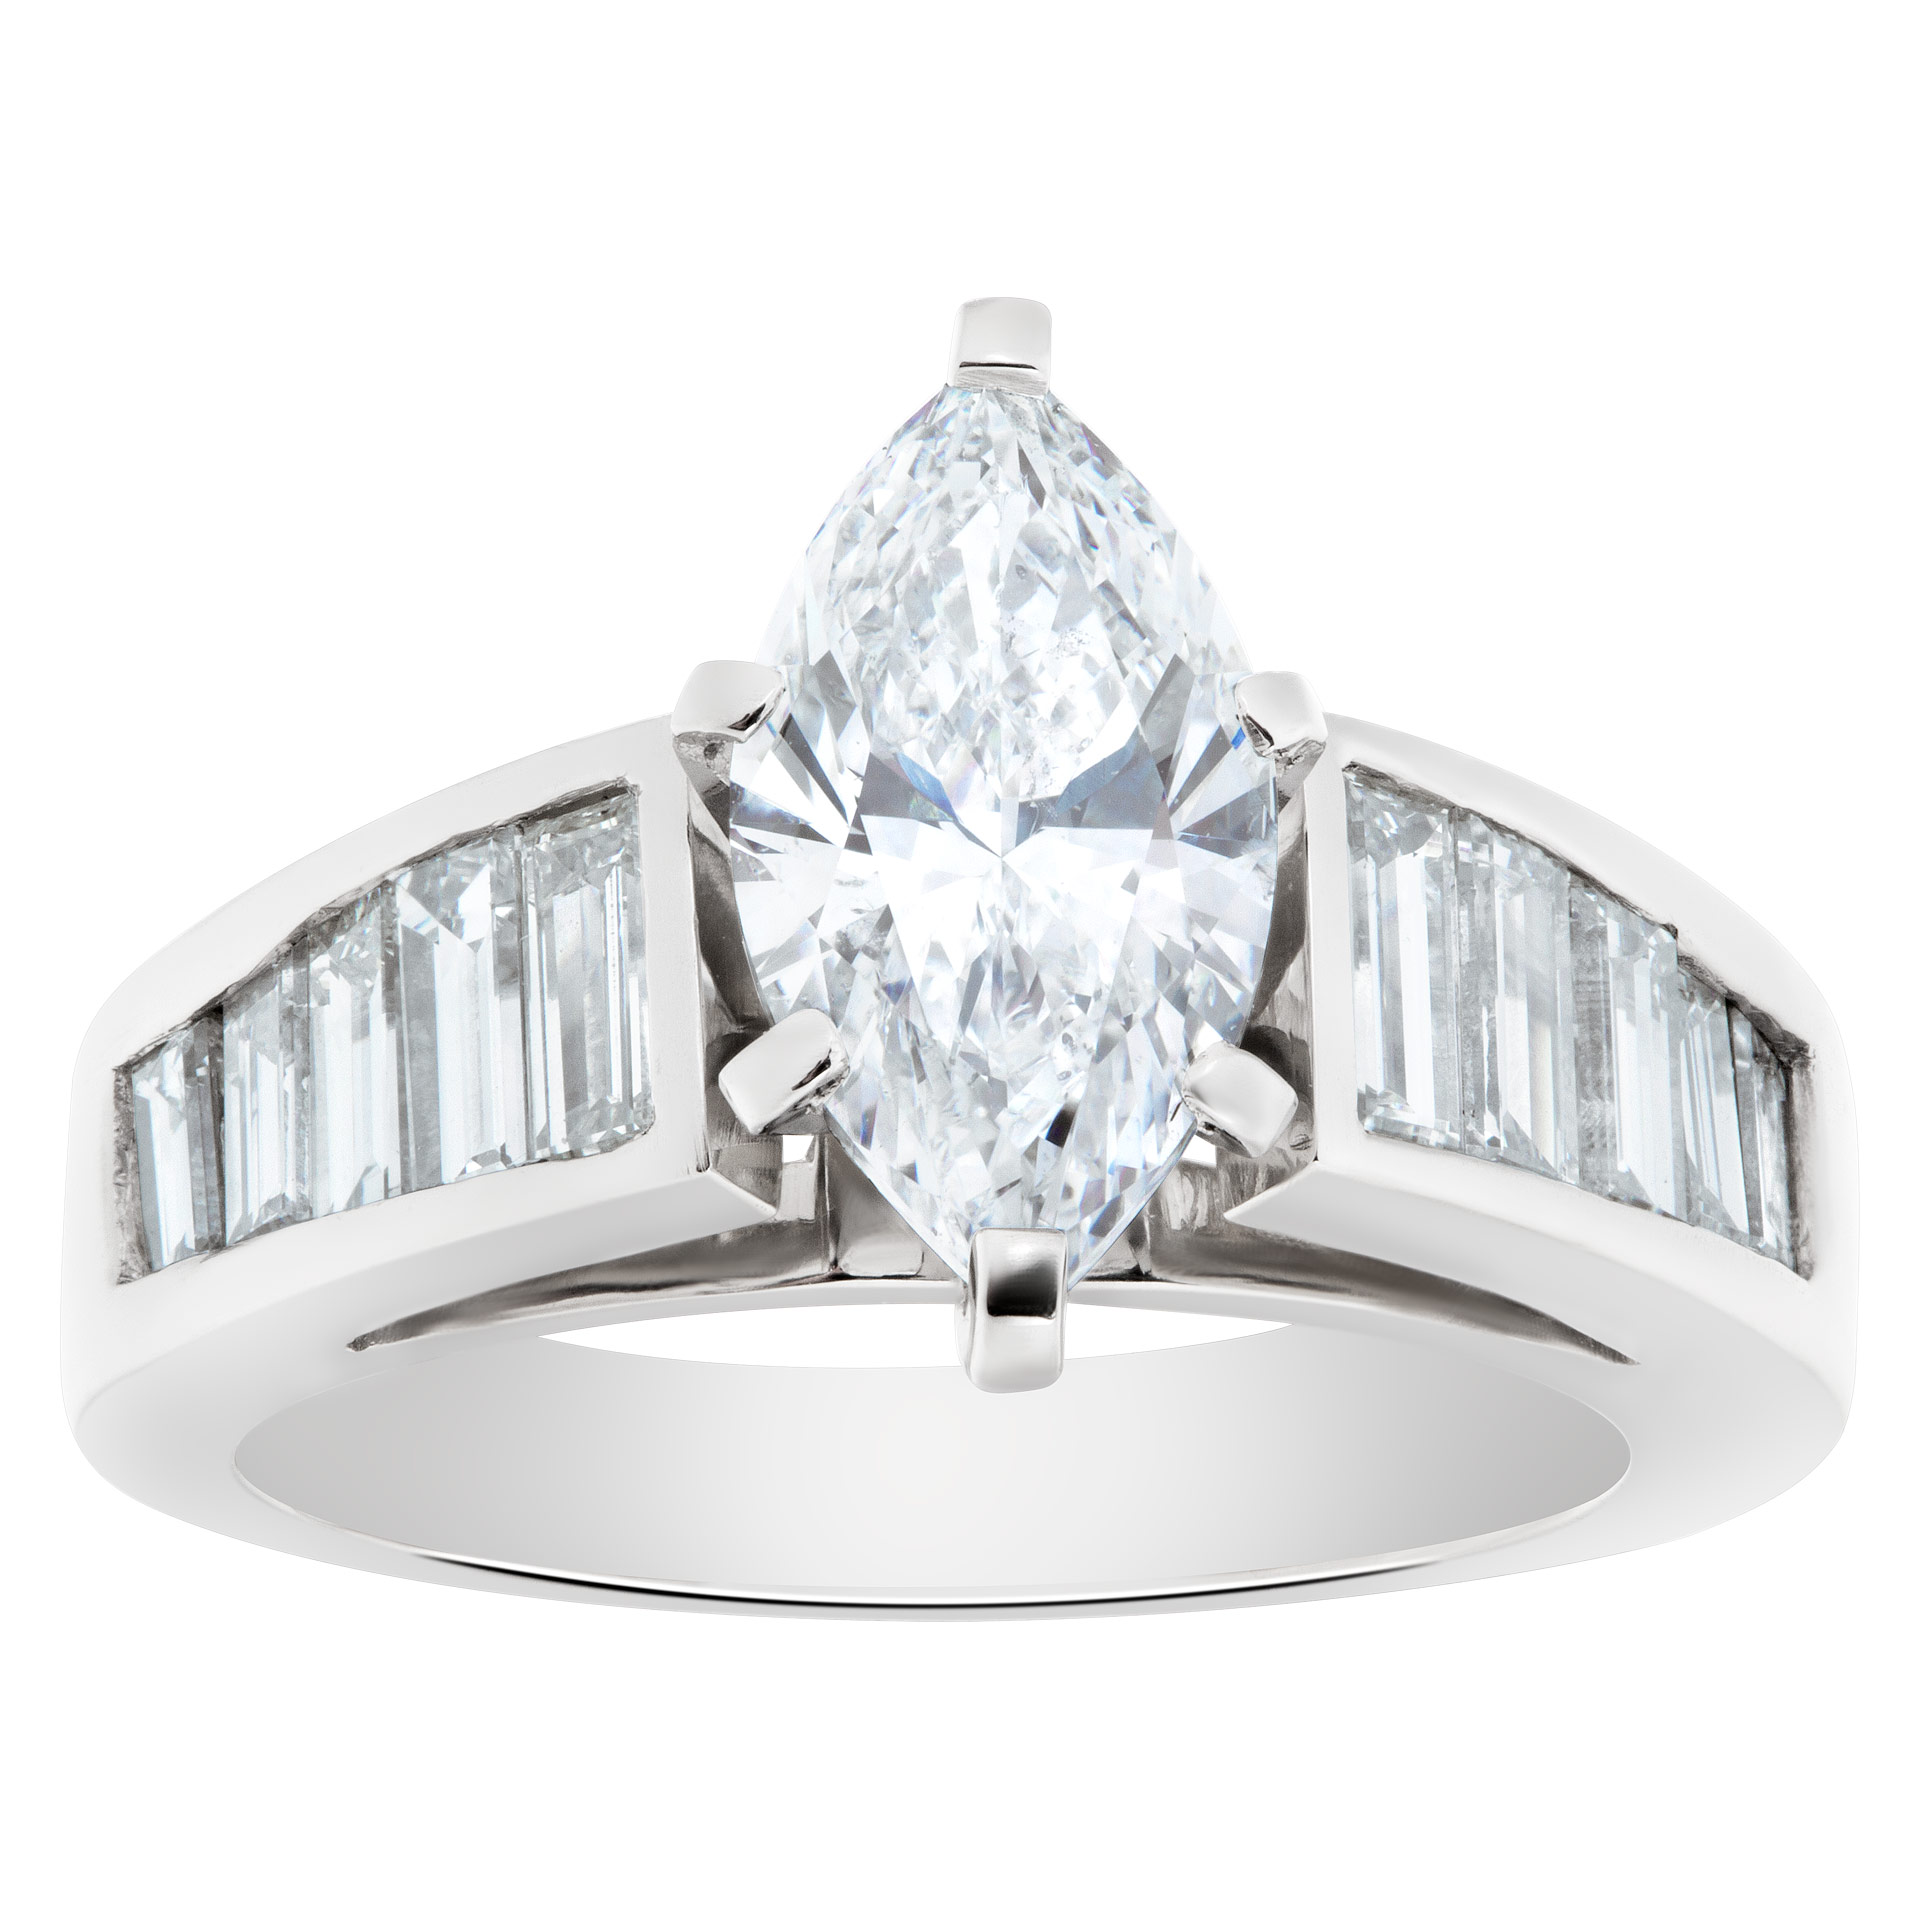 GIA certified marquise brilliant cut diamond 1.53 carat (D color, SI1 clarity) set in platinum setting